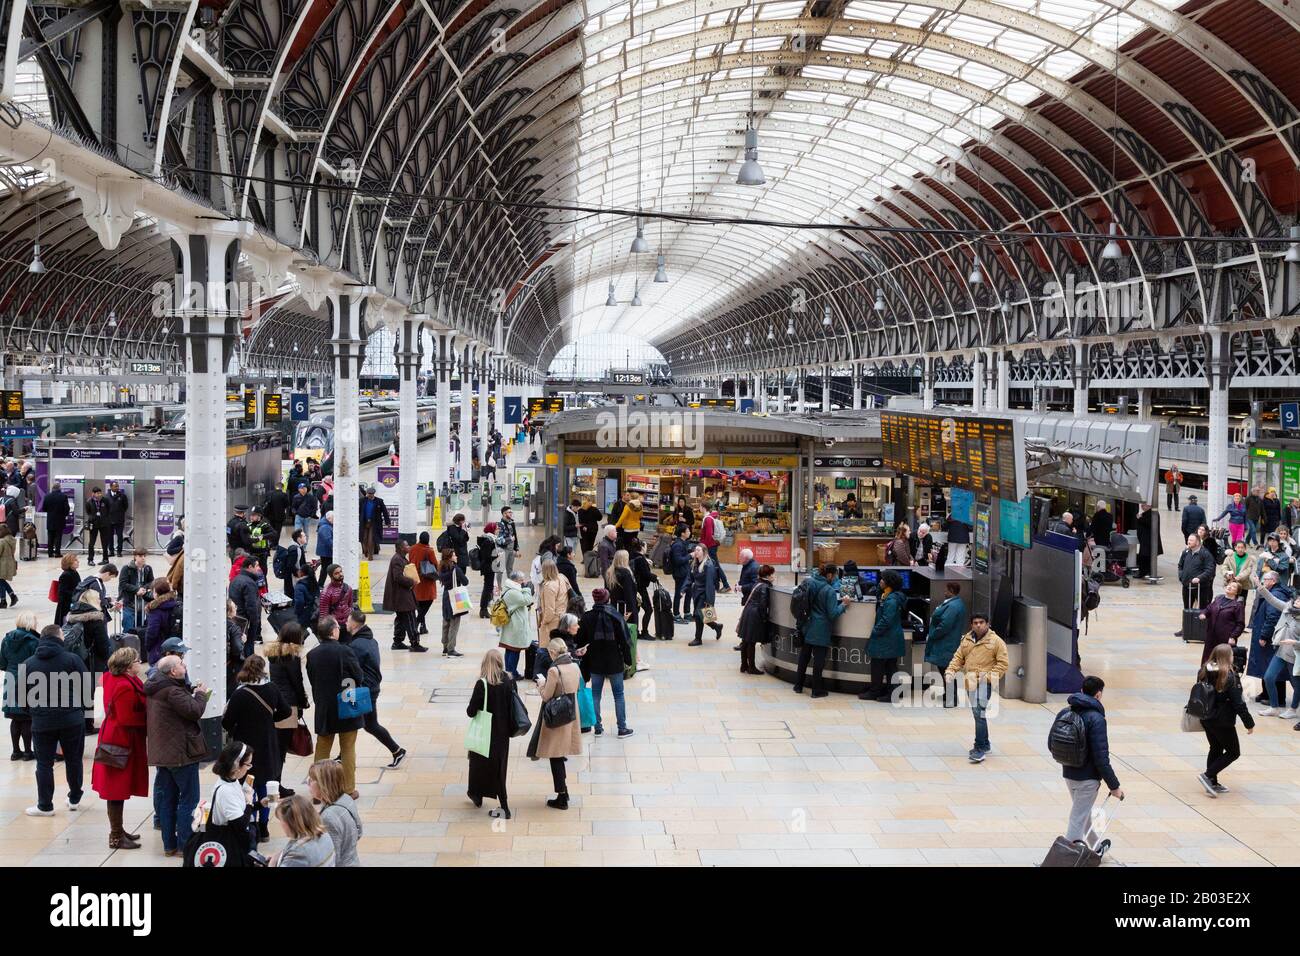 Paddington Station London UK - Menschenmenge auf dem Bahnhof Concourse, London Paddington Endstation, London England Großbritannien Stockfoto